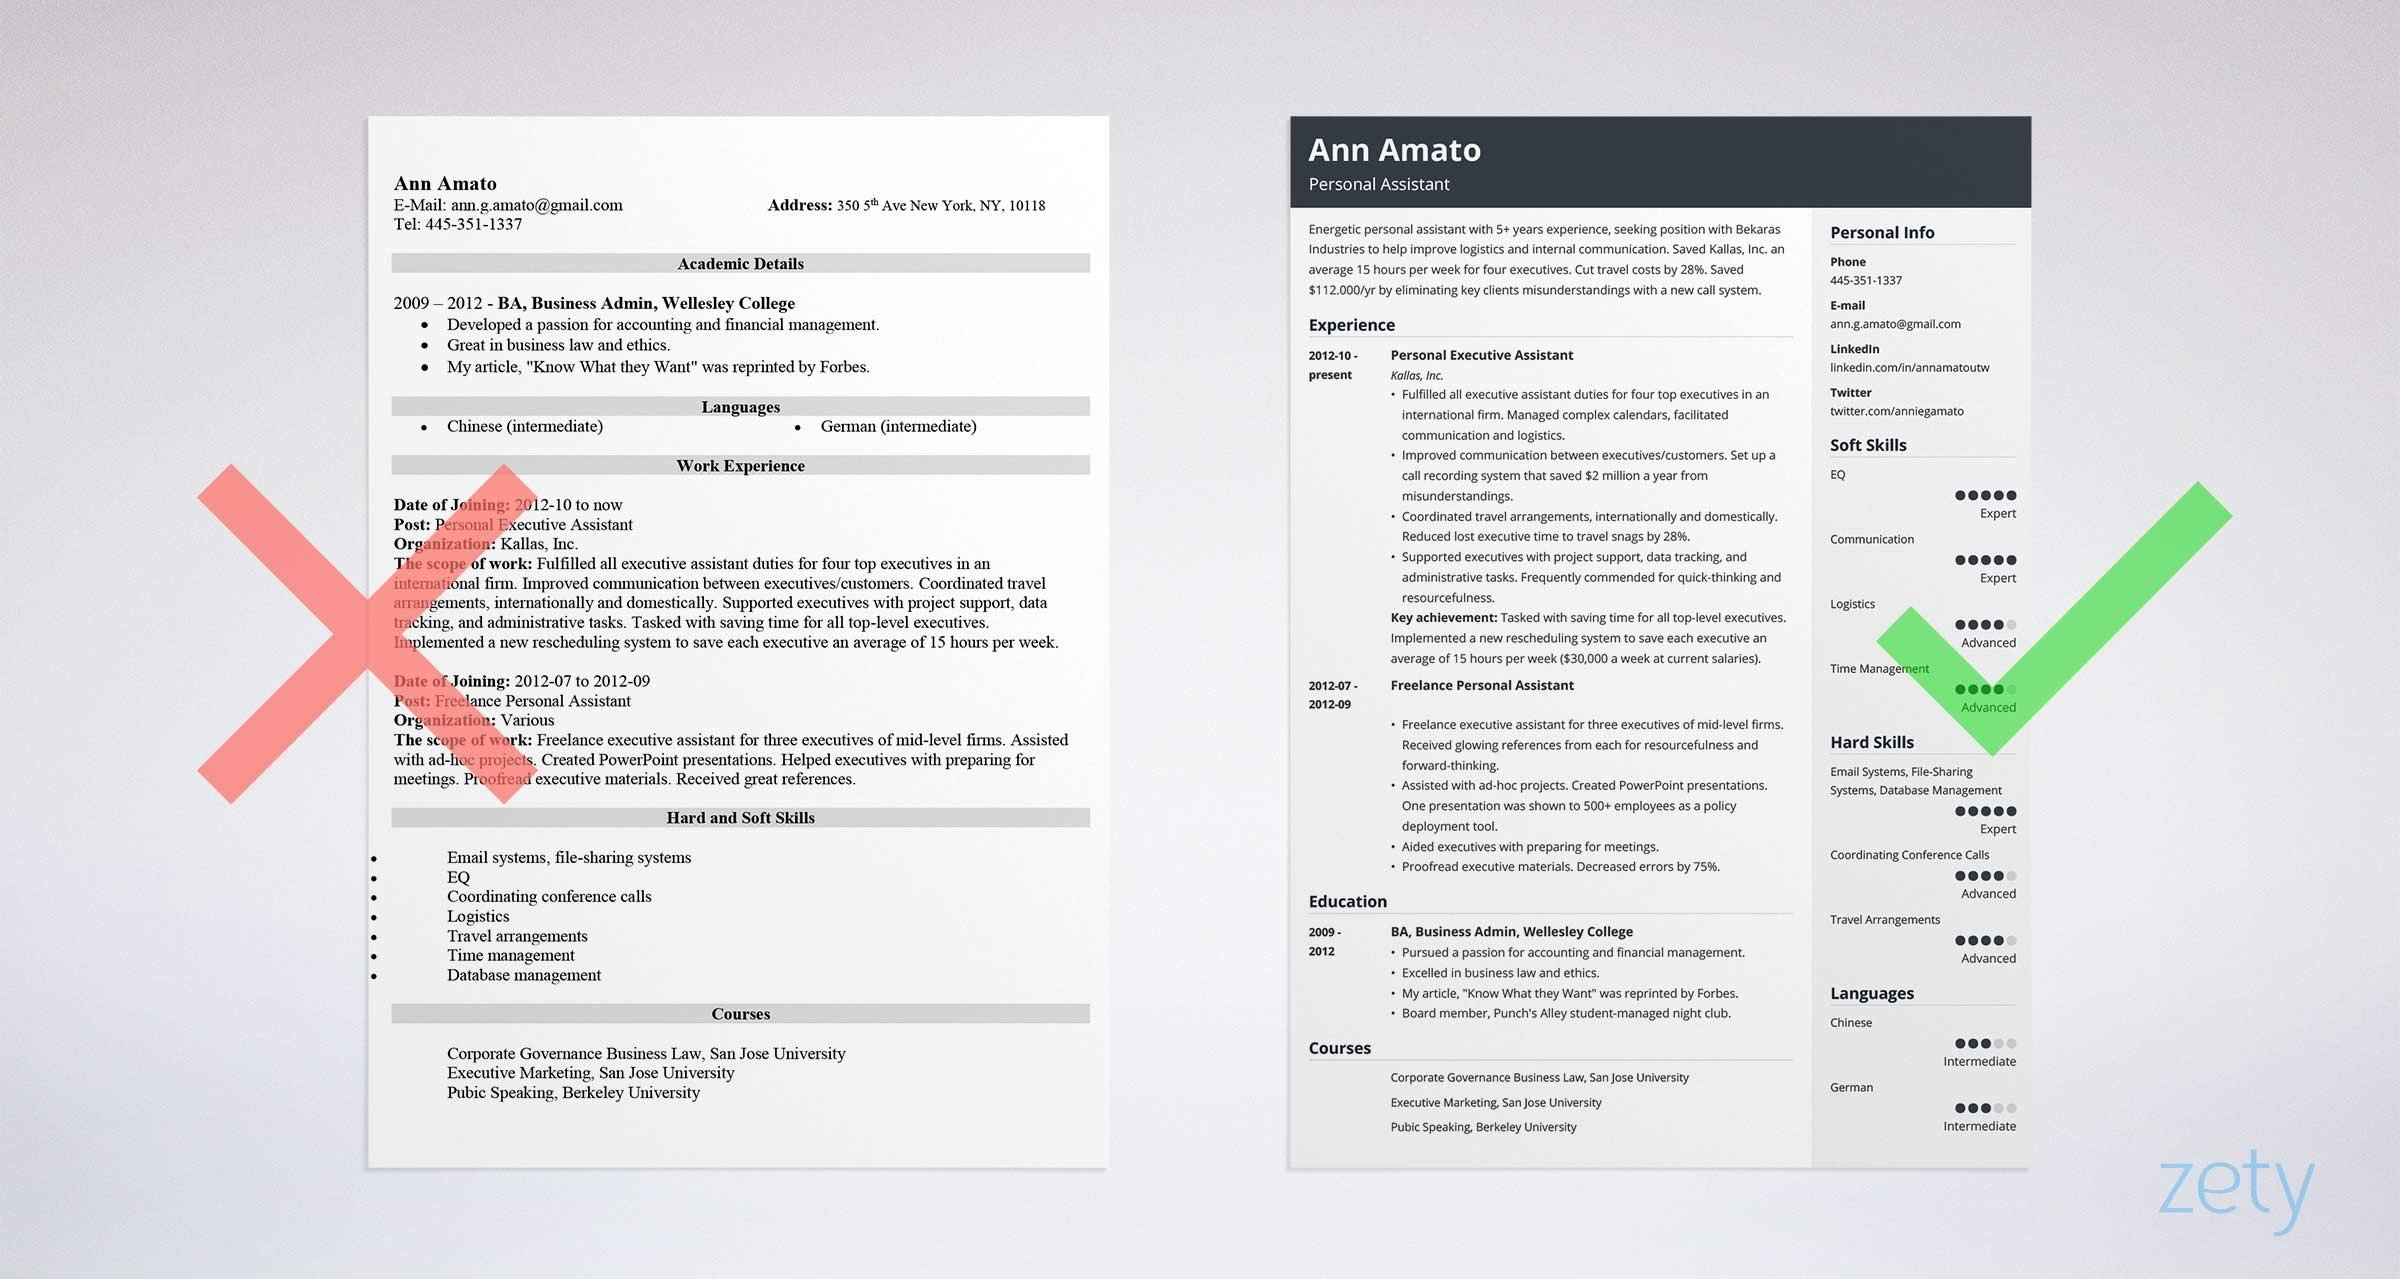 Personal Assistant Resume Sample Job Description Skills inside dimensions 2400 X 1279